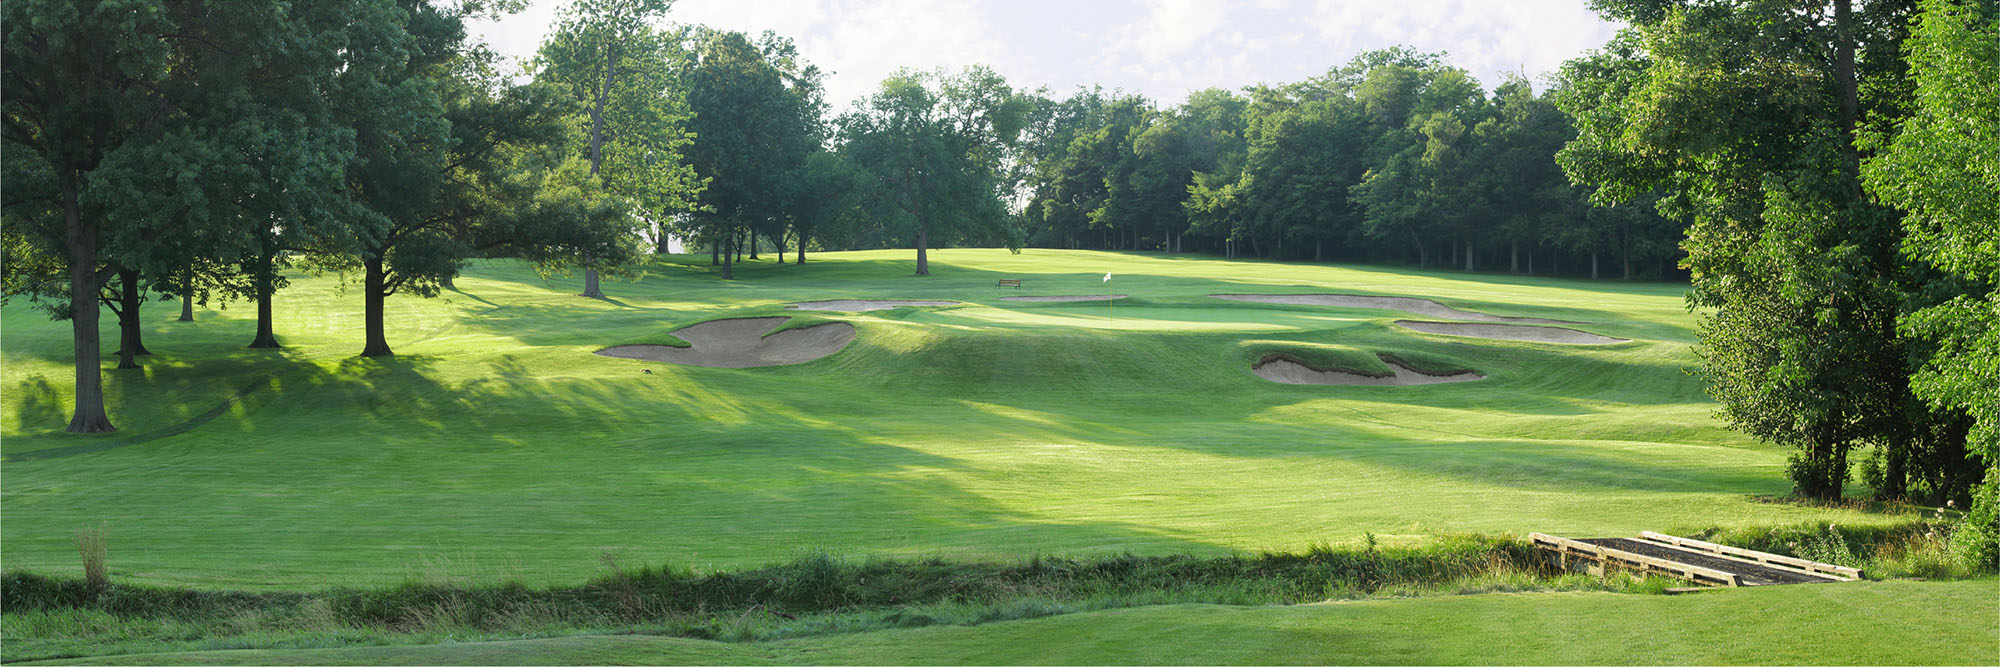 Golf Course Image - Canterbury No. 11